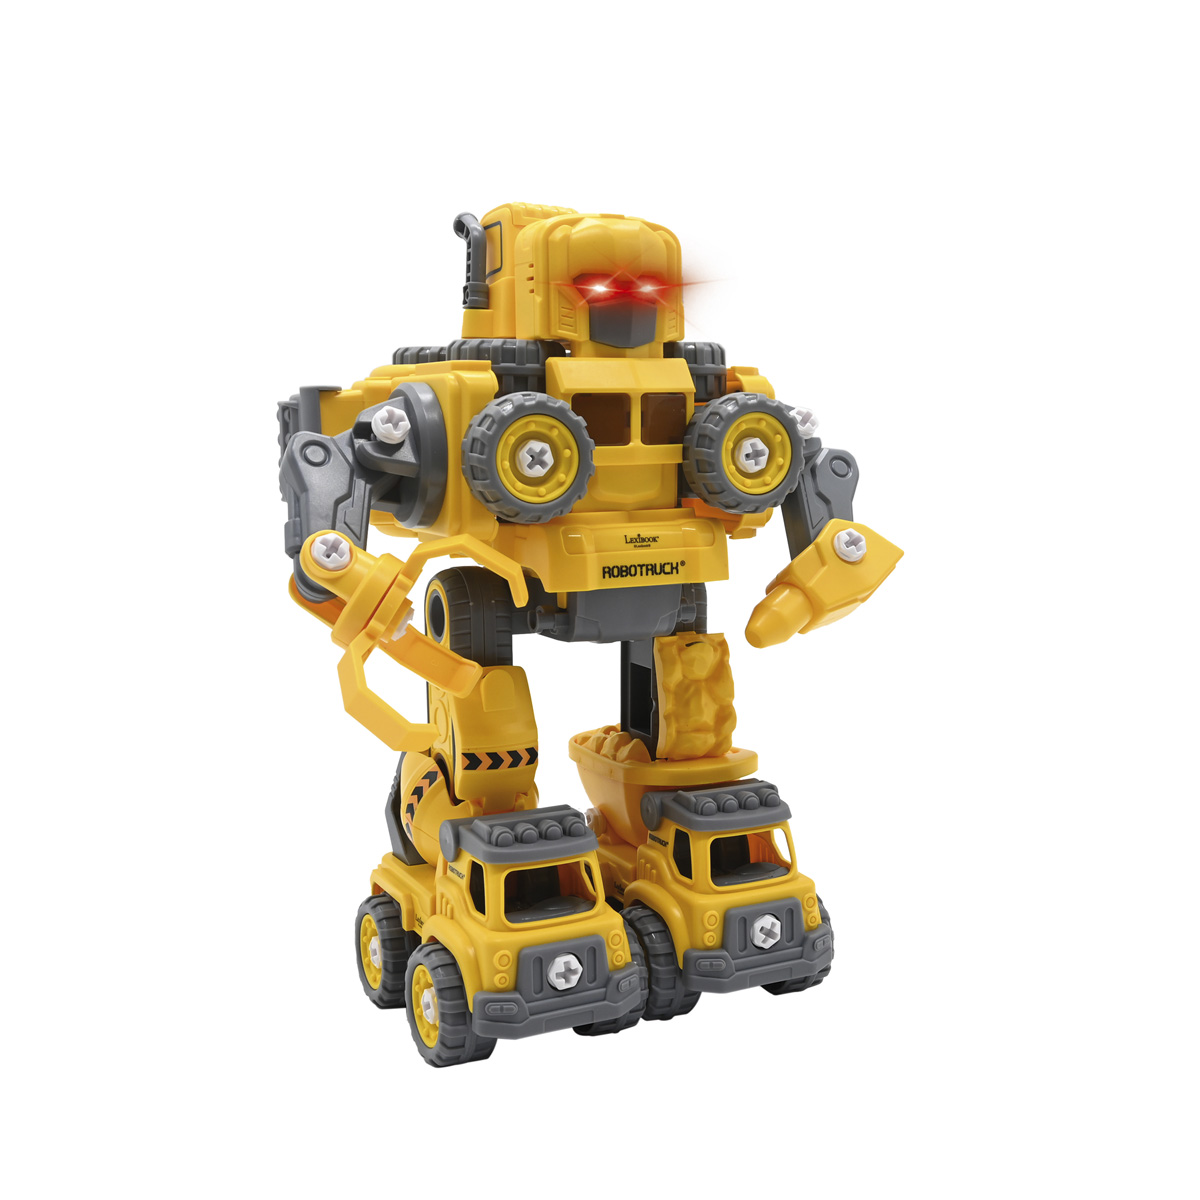 LEXIBOOK ROBOTRUCK 5 - bsw Roboter Experimentierkasten, für Bauset Baufahrzeuge 1 1 5 Roboter in Gelb/Grau